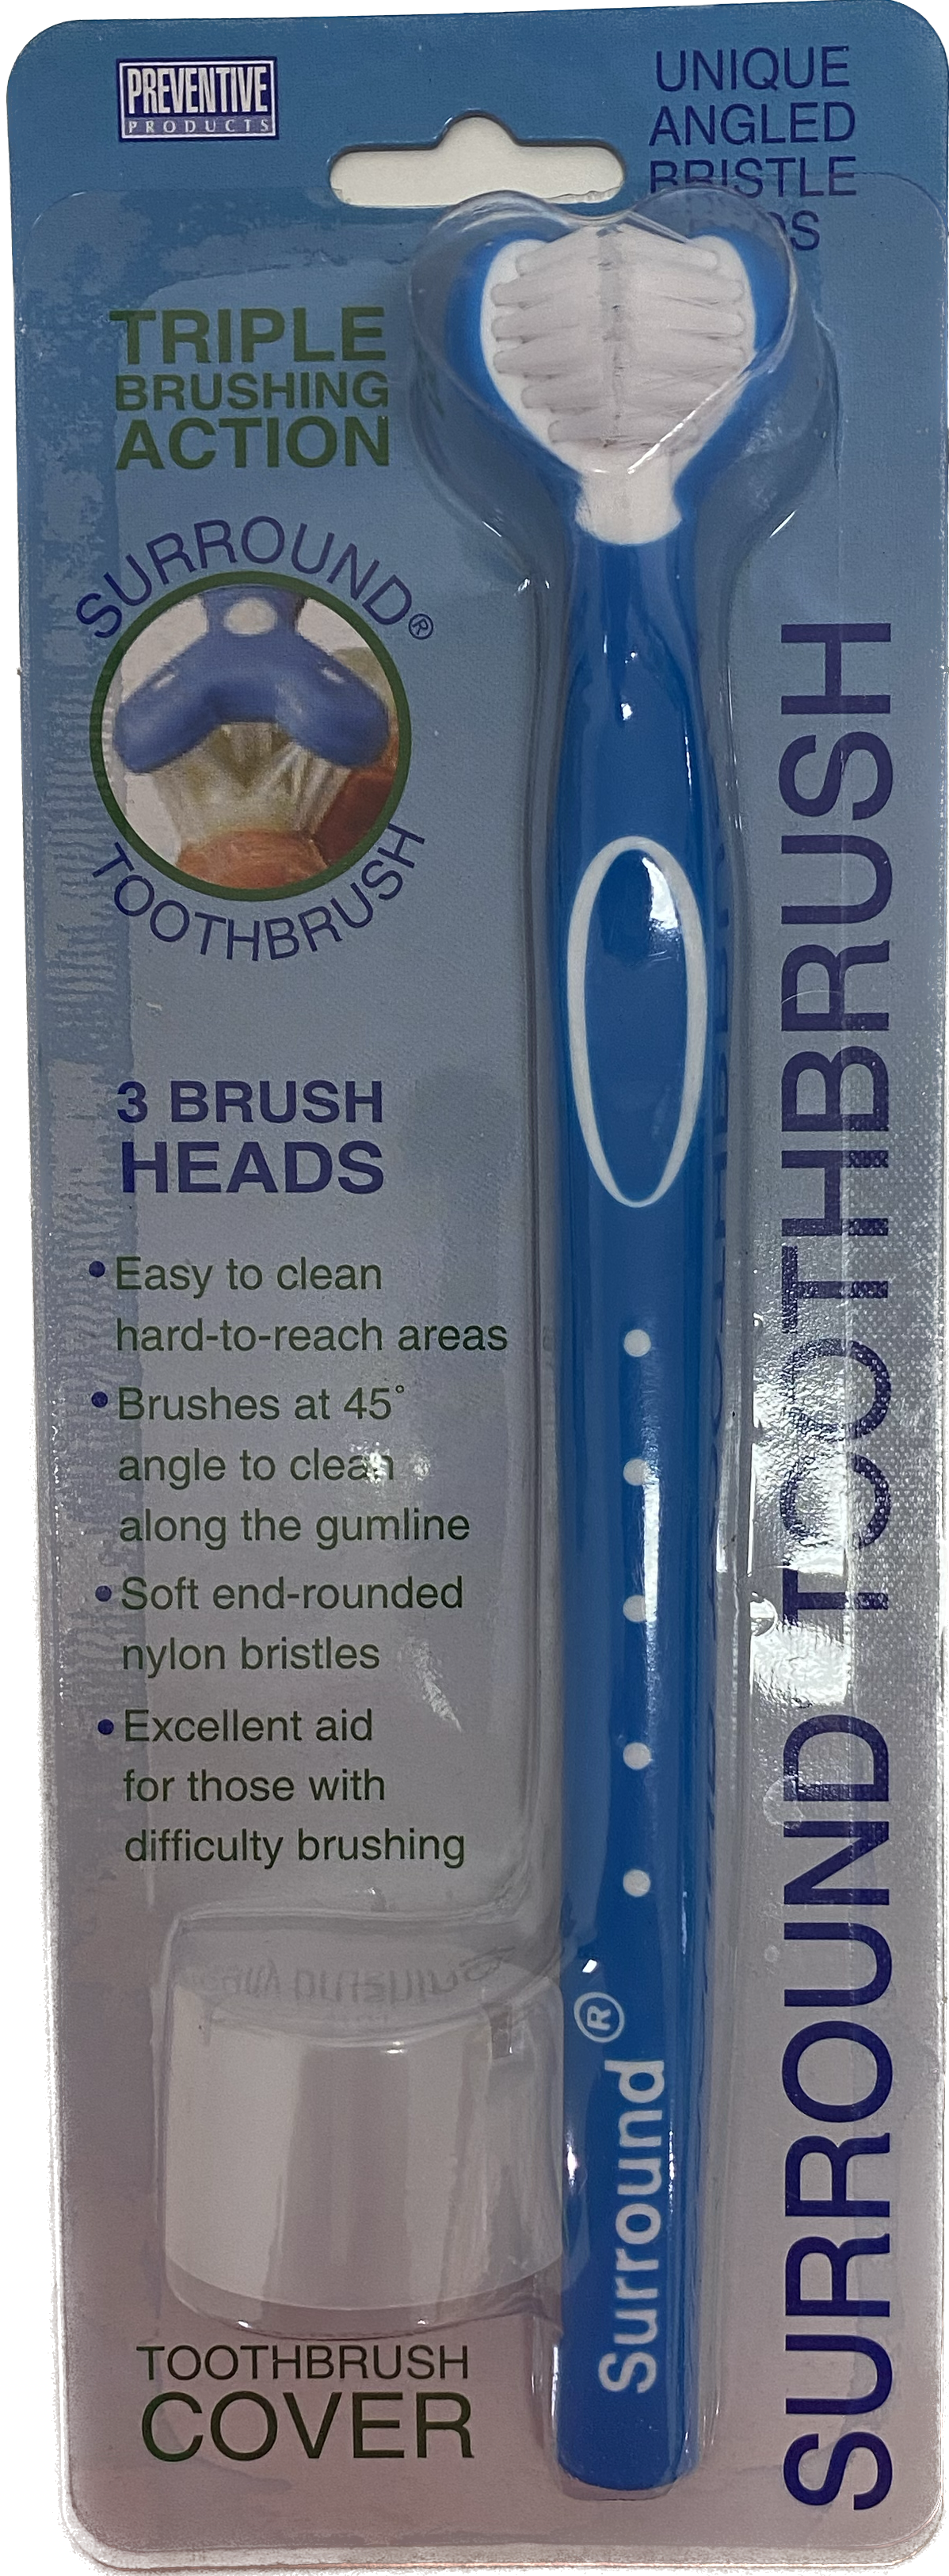 surround toothbrush blue